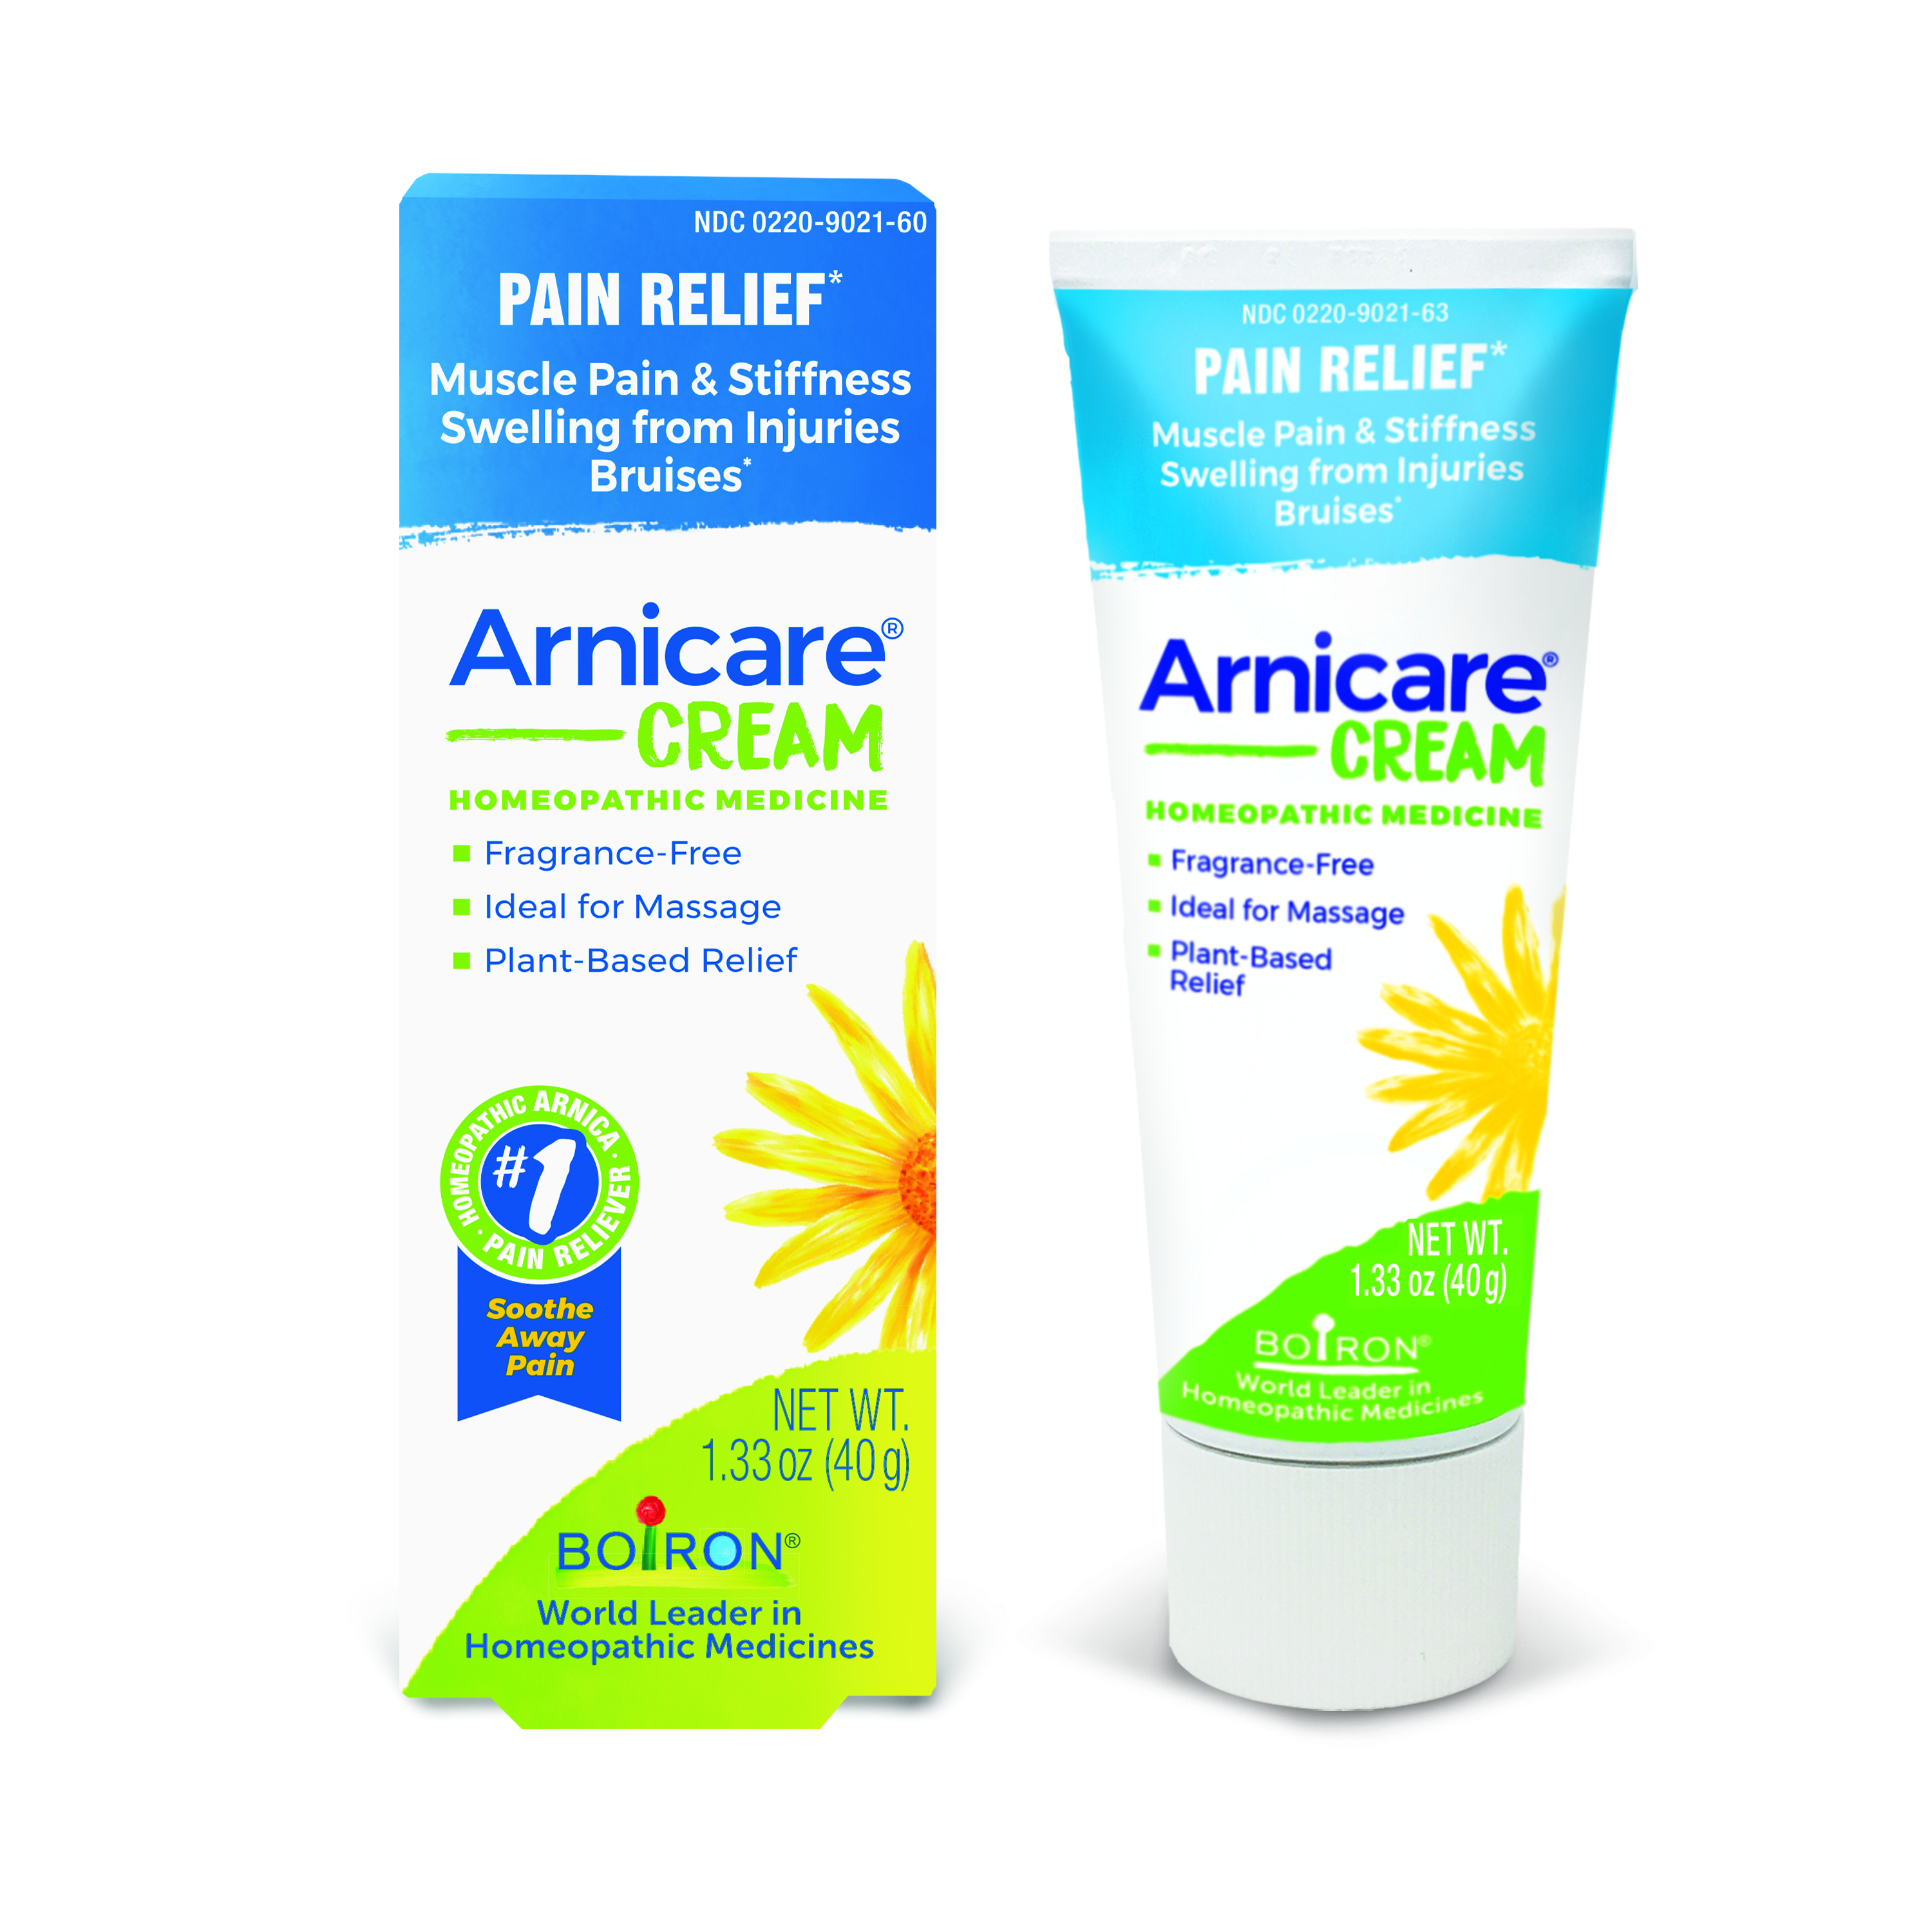 Image for Arnicare Cream